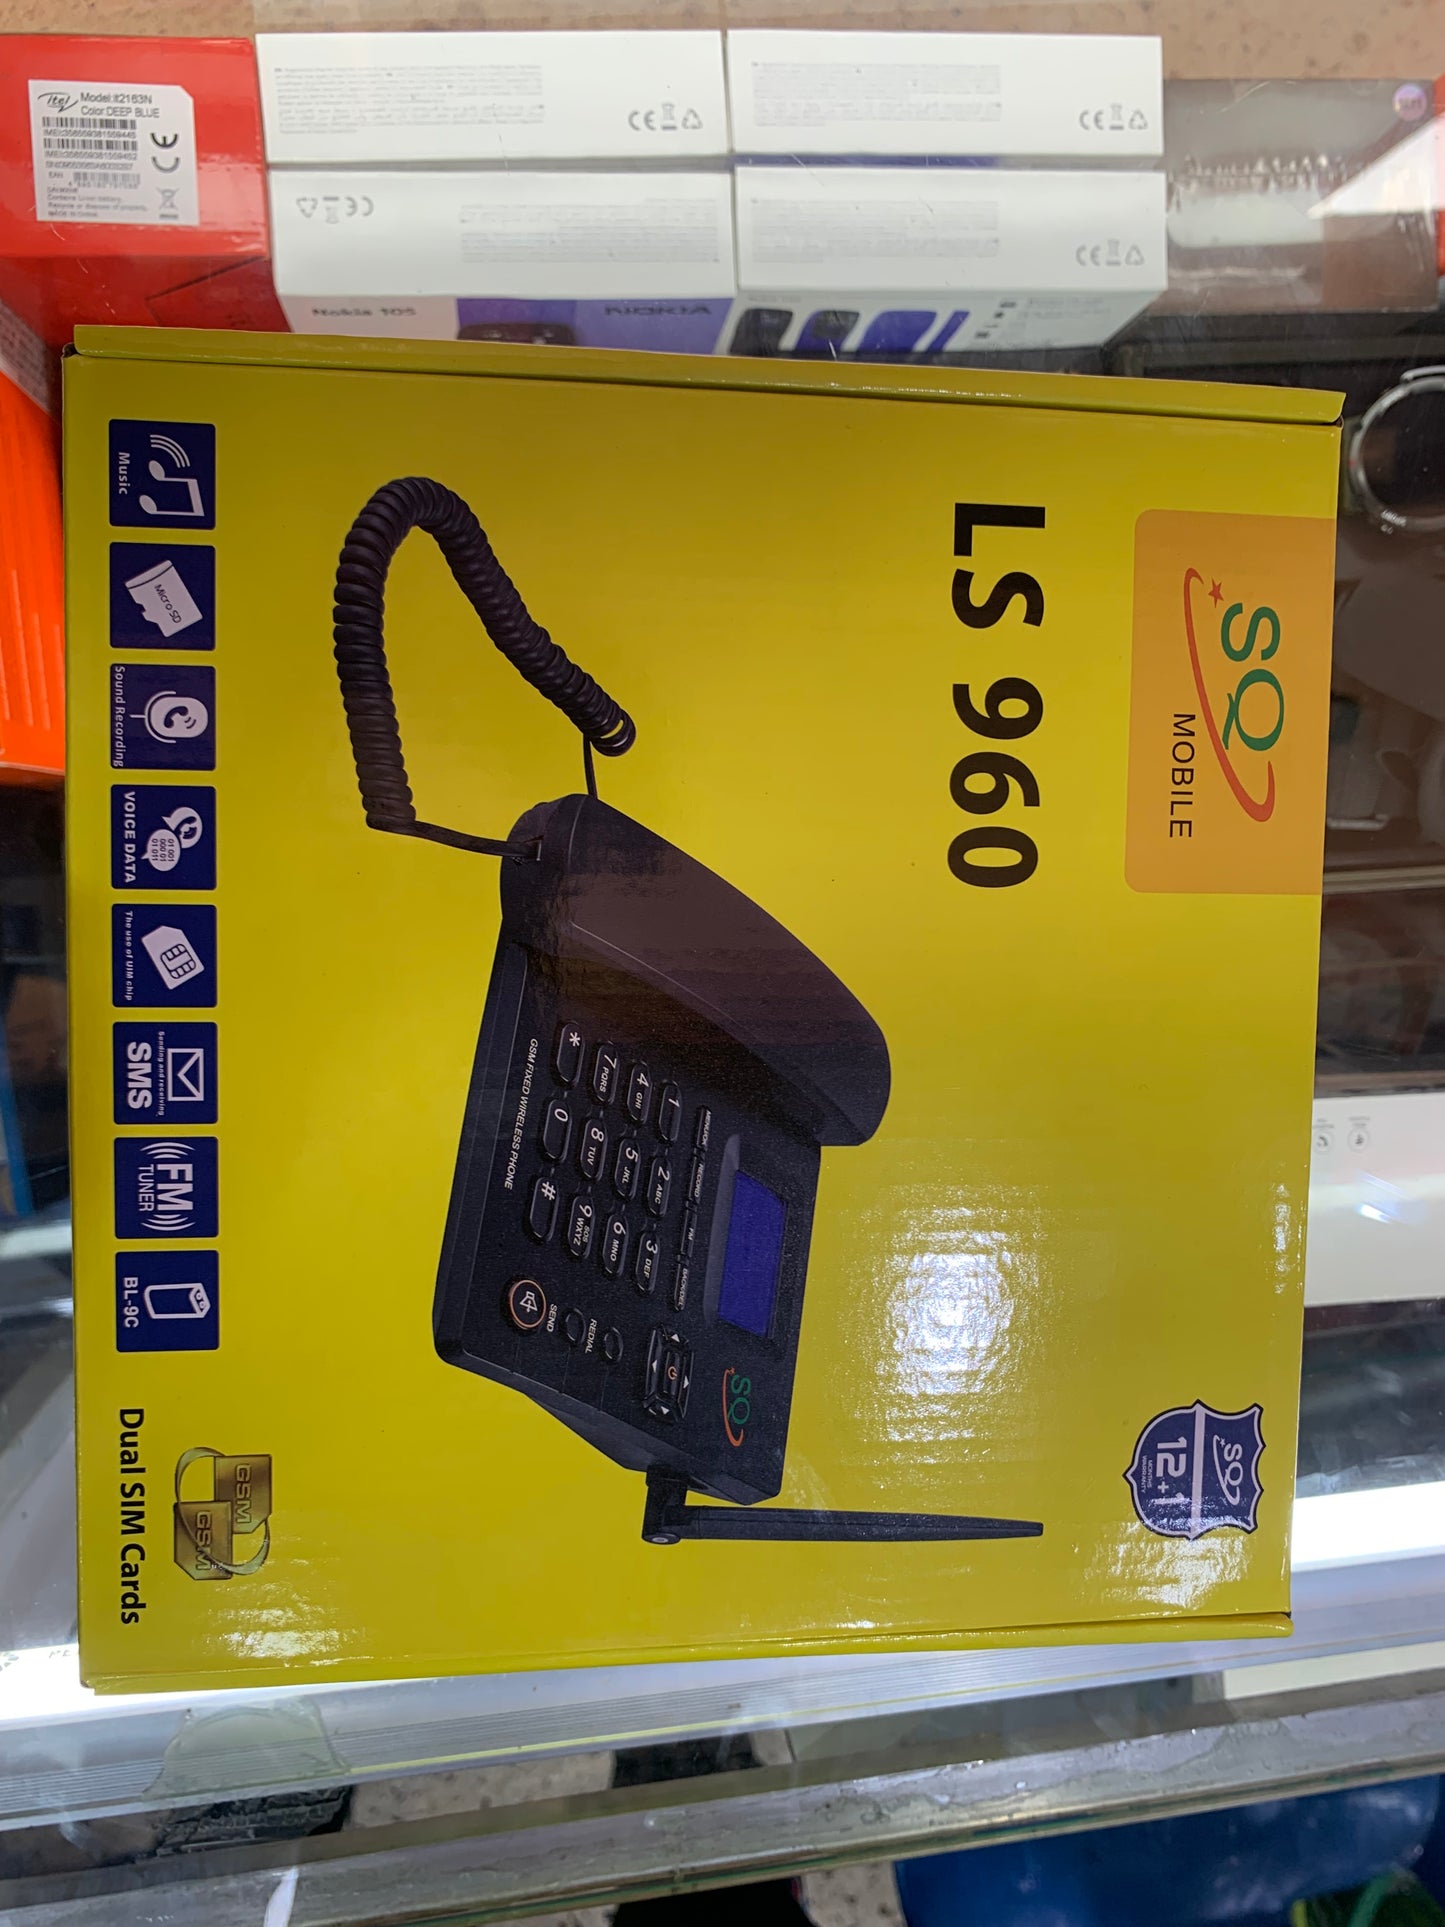 SQ Mobile SQ LS-960 Dual Sim Gsm Wireless Landline Desktop Phone – Black